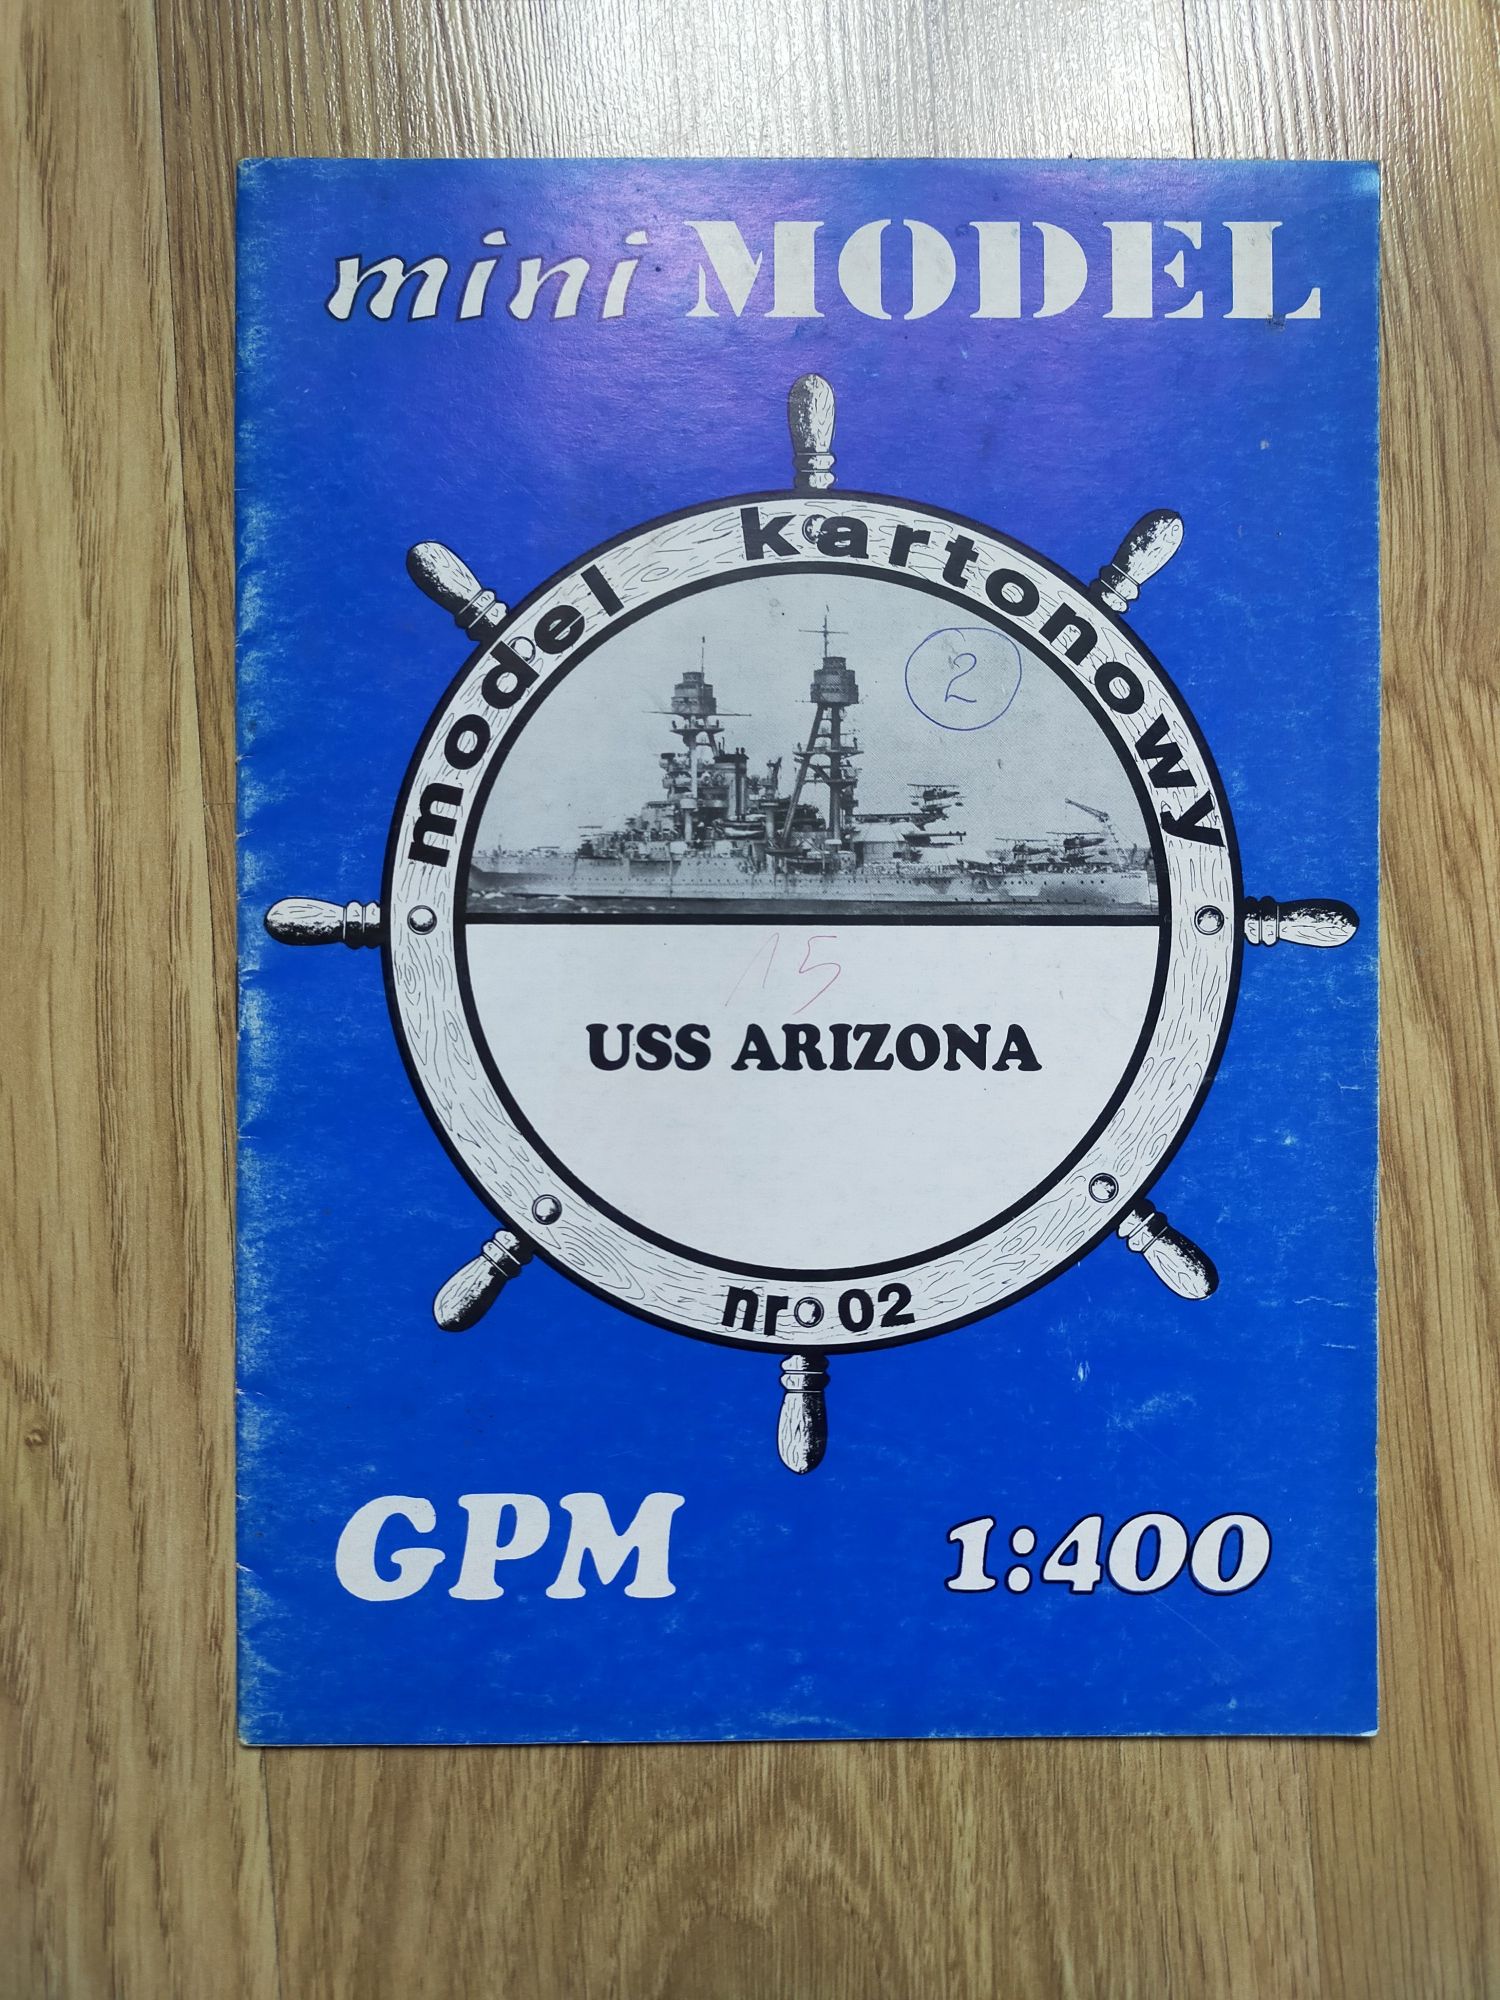 Model kartonowy mini model GPM USS ARIZONA 1:400